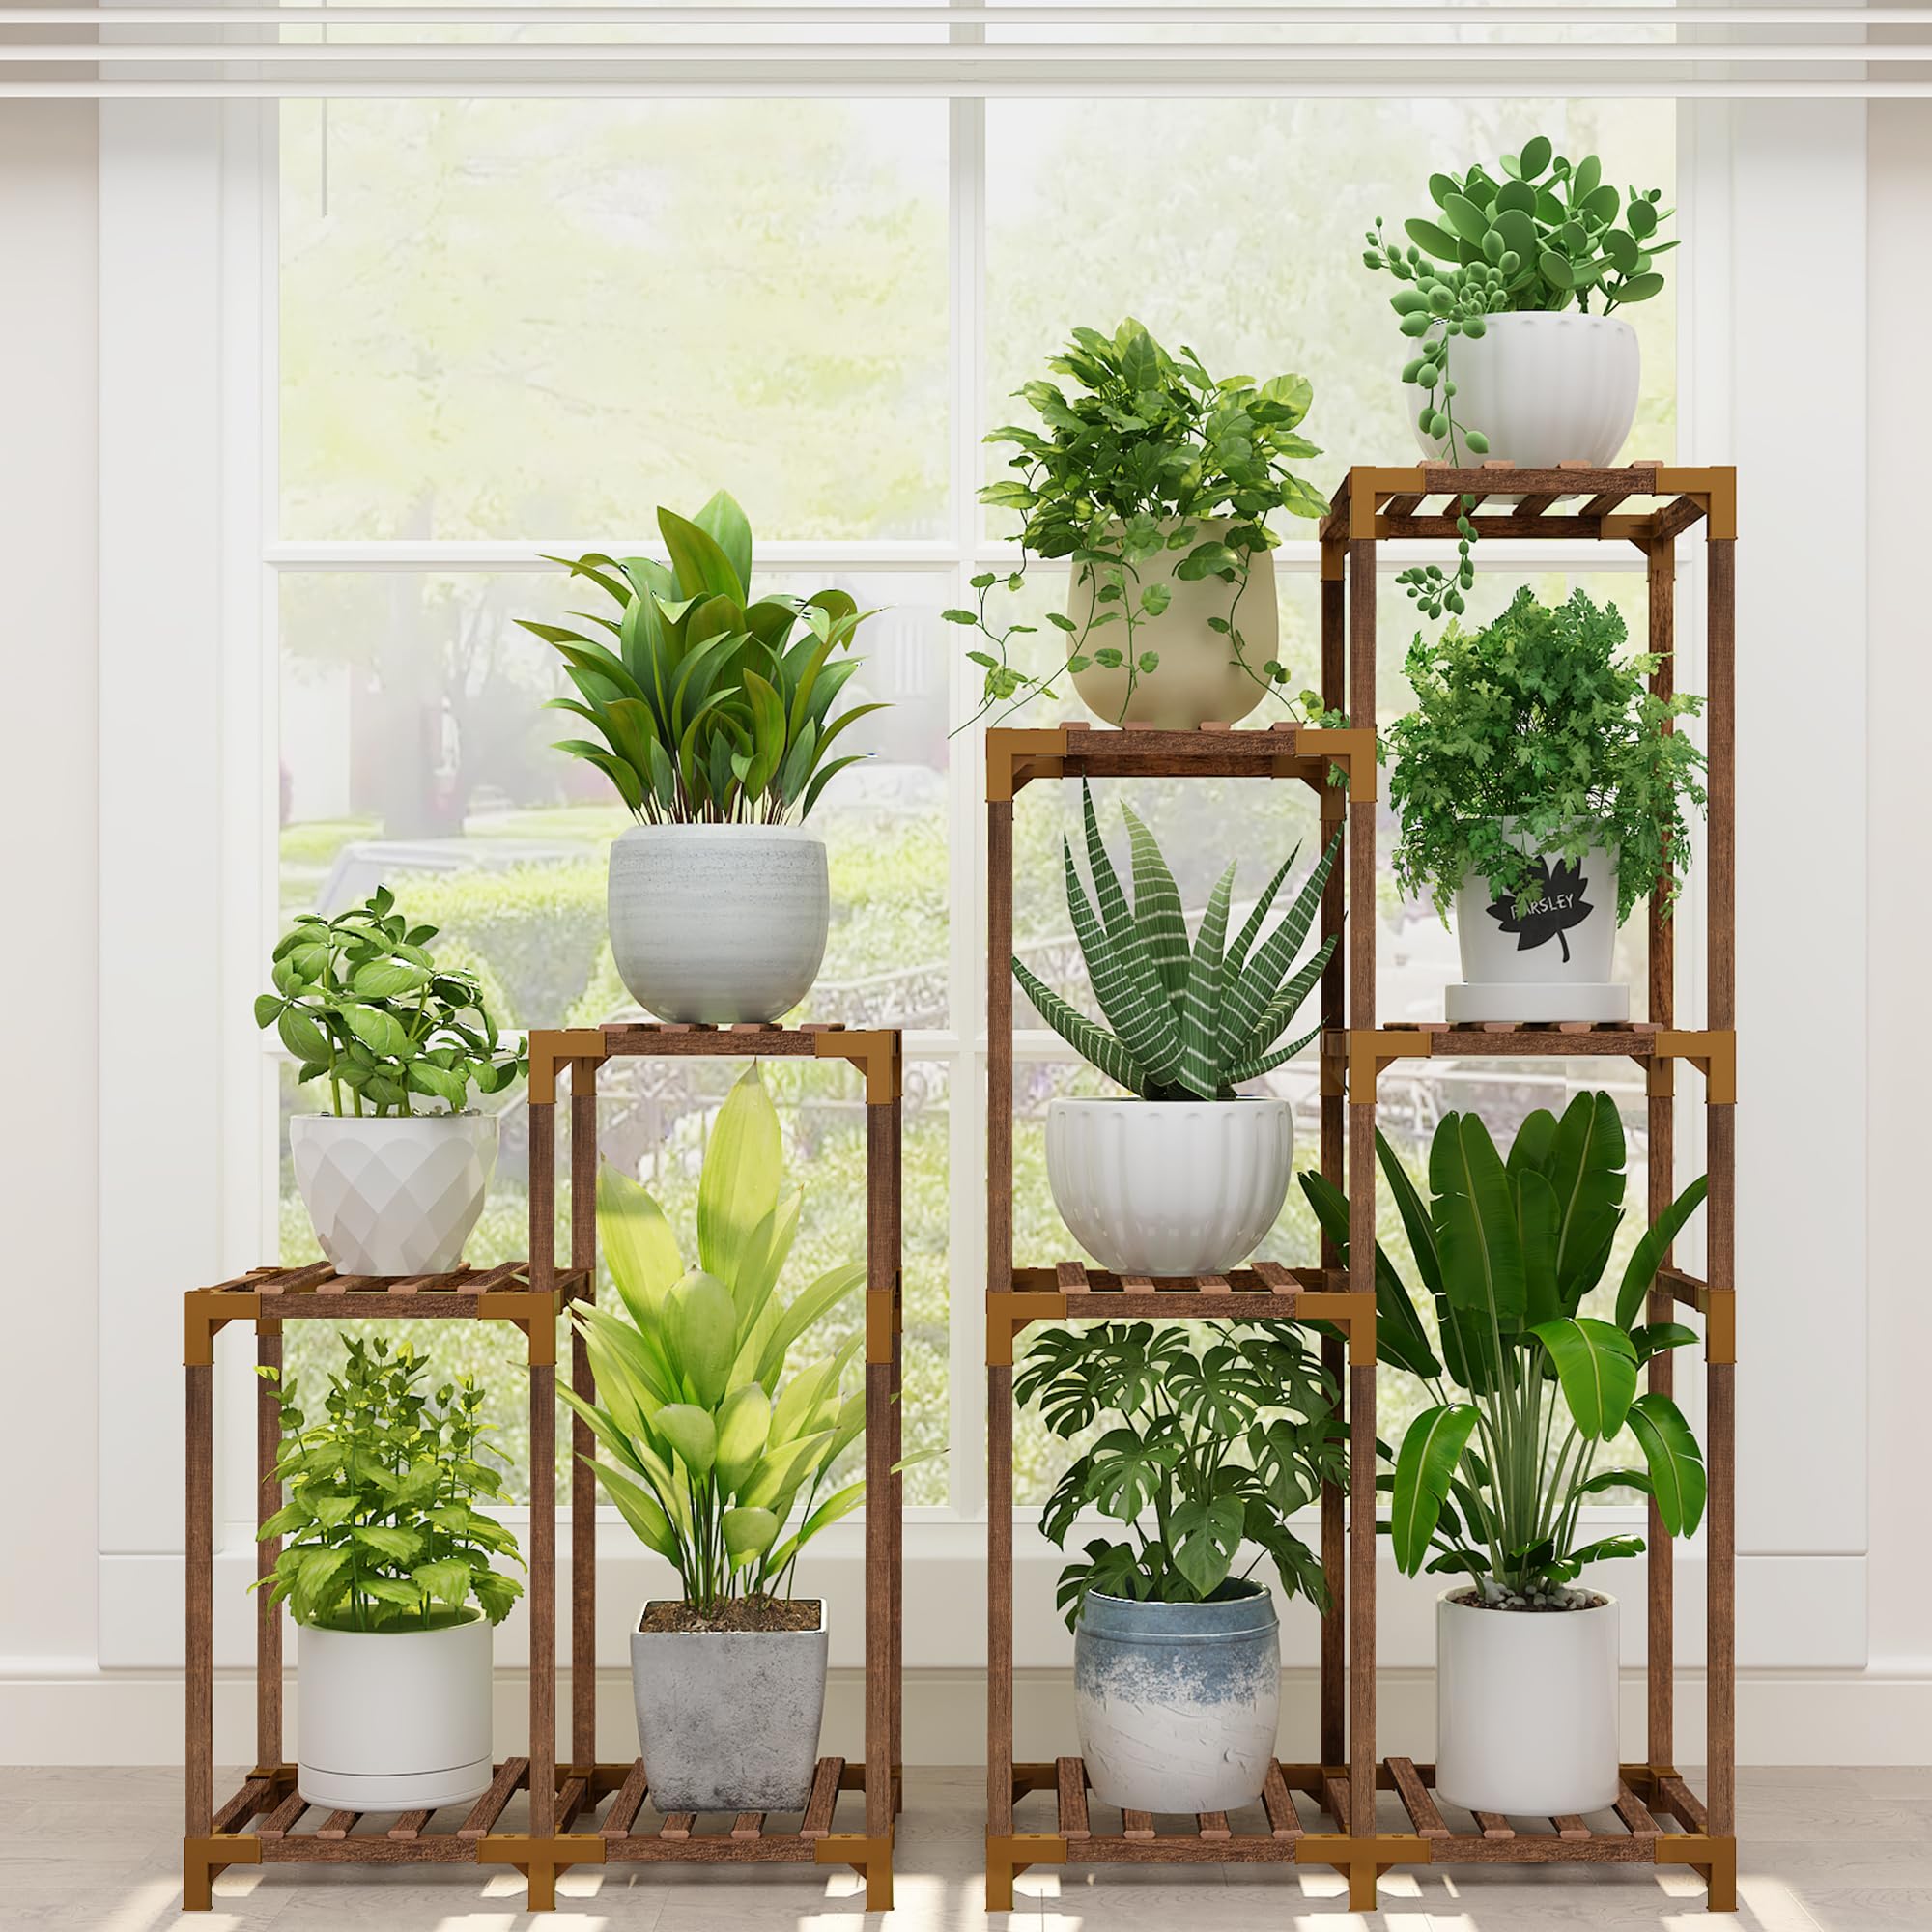 HOMKIRT HOMOKIRT Plant Stands Indoor Clearance, 10 Tier Plant Shelf for Multiple Tall Plants, Wood Corner Plant Stand Rack Holder Flower